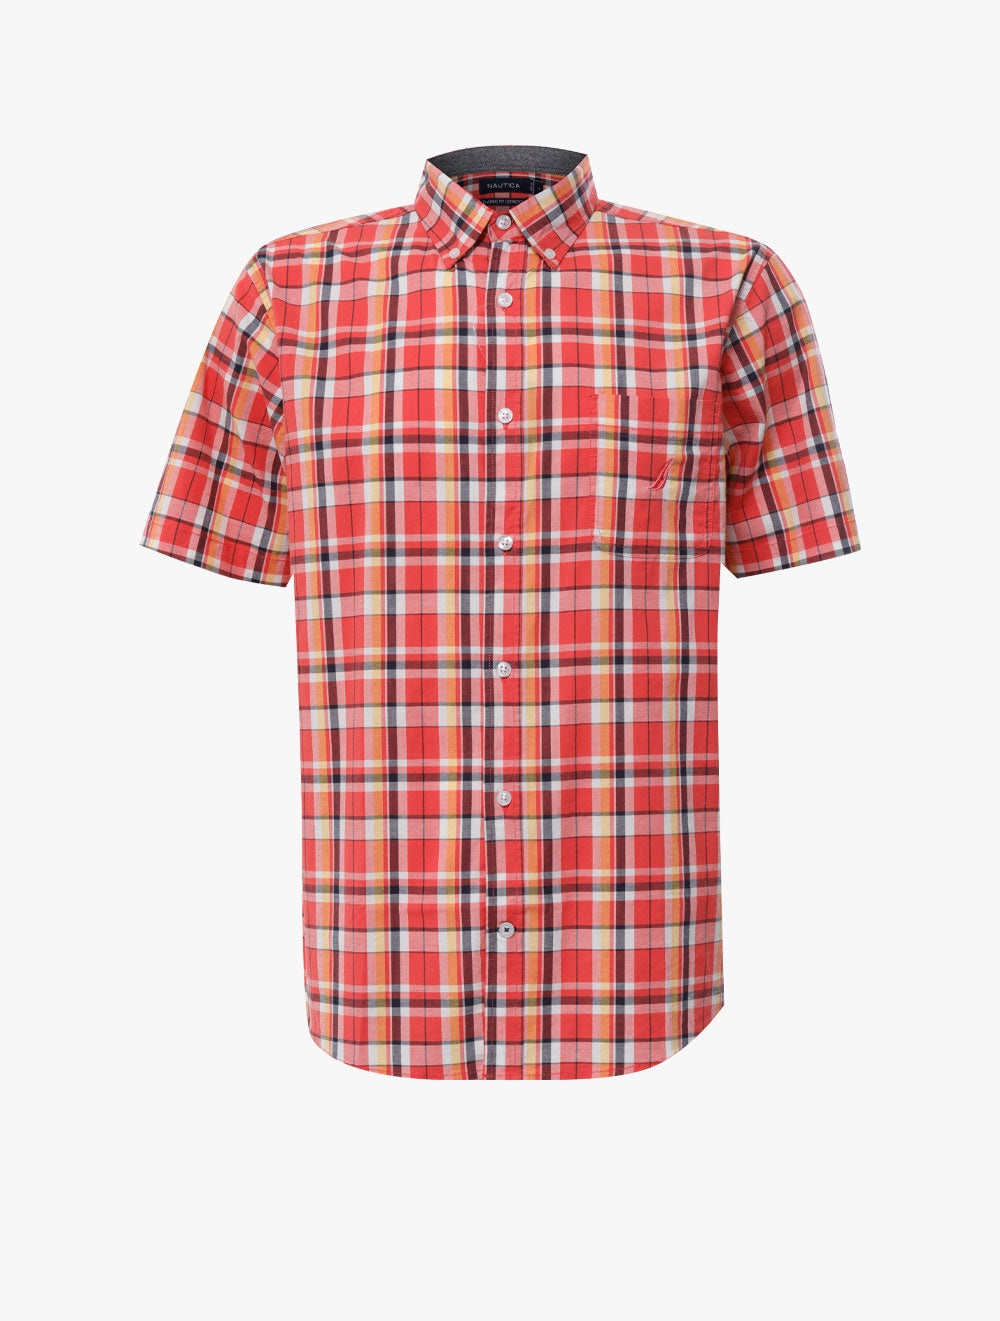 NAUTICA
Men Shirt - NAUW351016SR